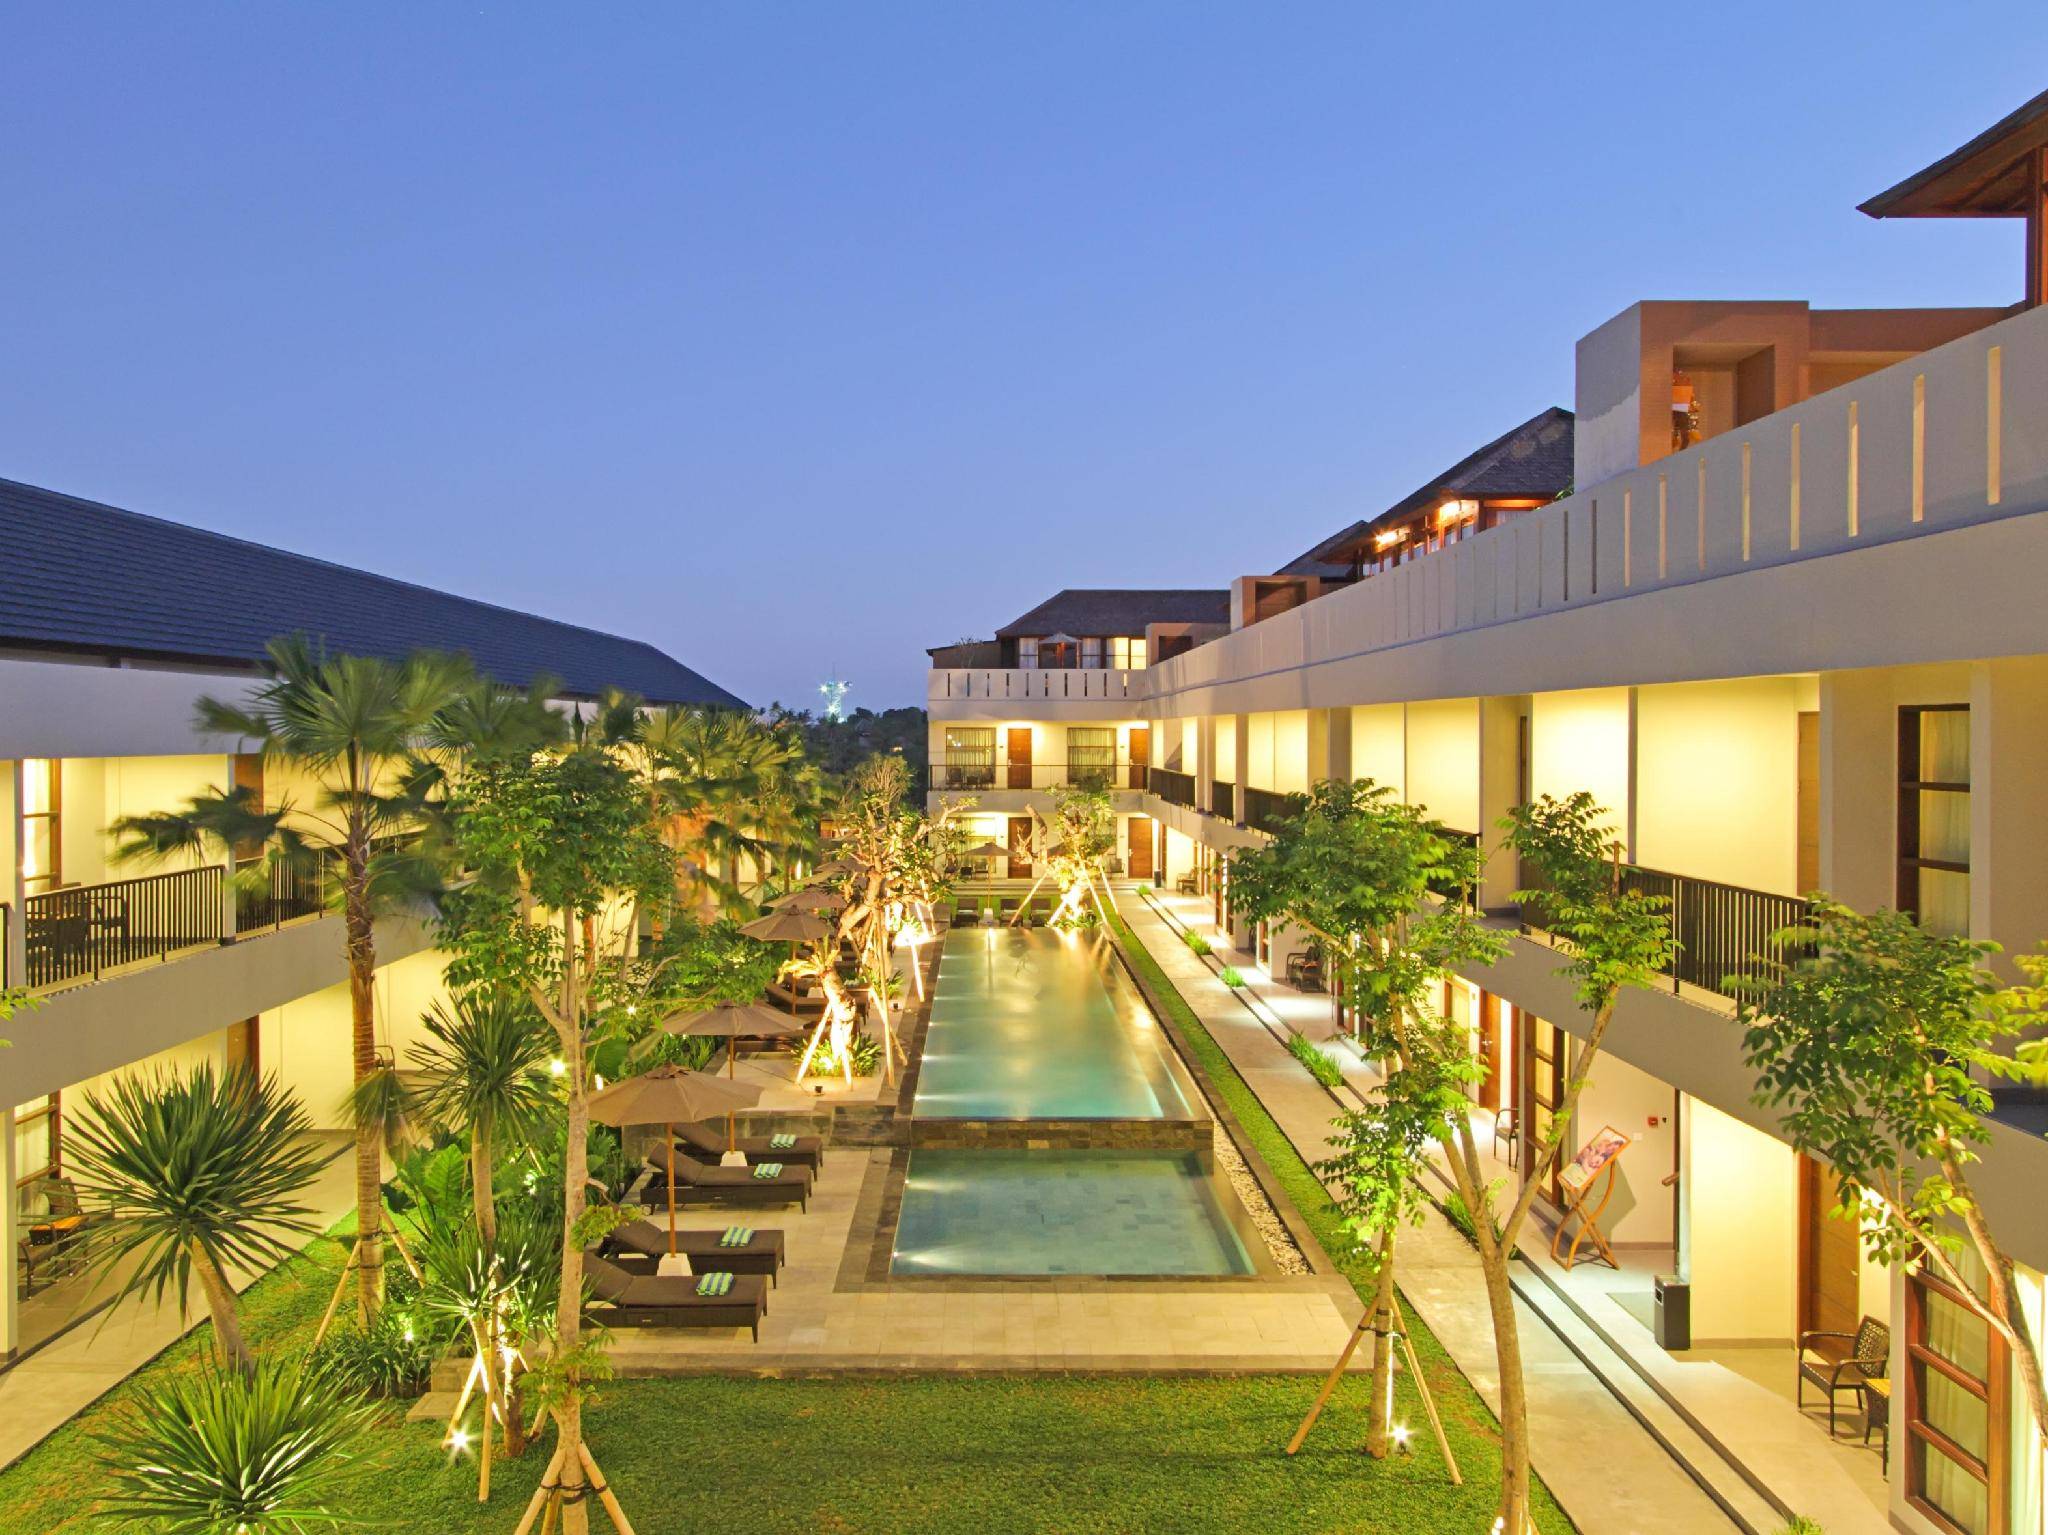 Amadea resort & villas accommodation